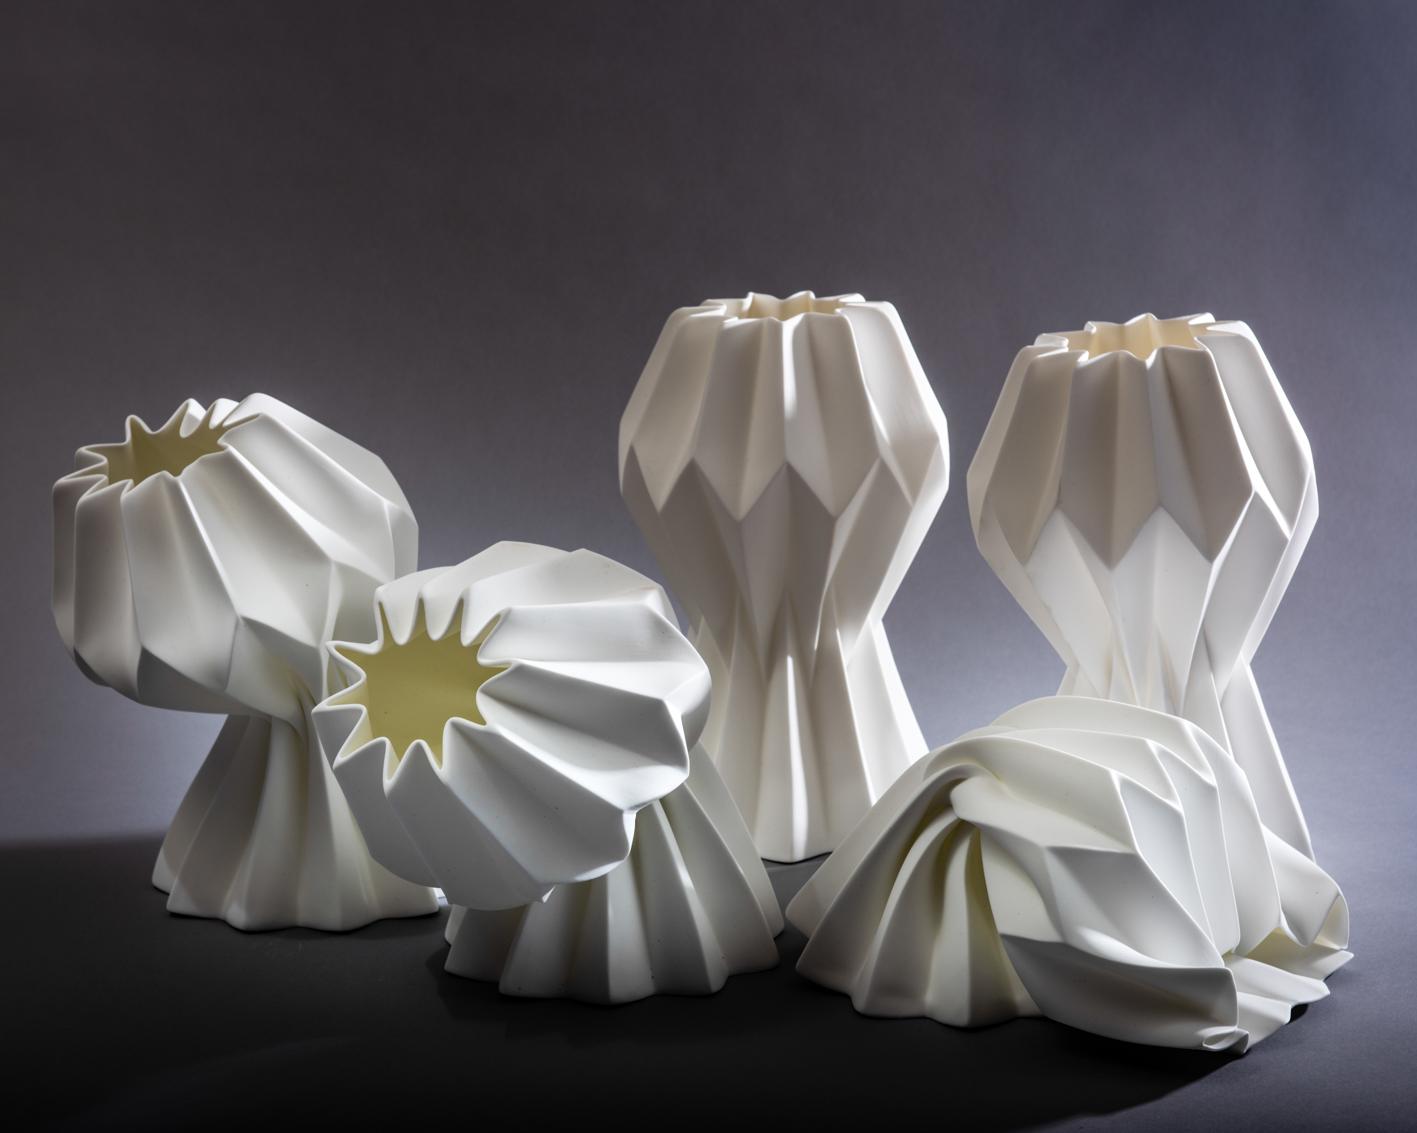 Fired “Slump” Contemporary Origami Ceramic Vase by Studio Morison, Full Slump Type